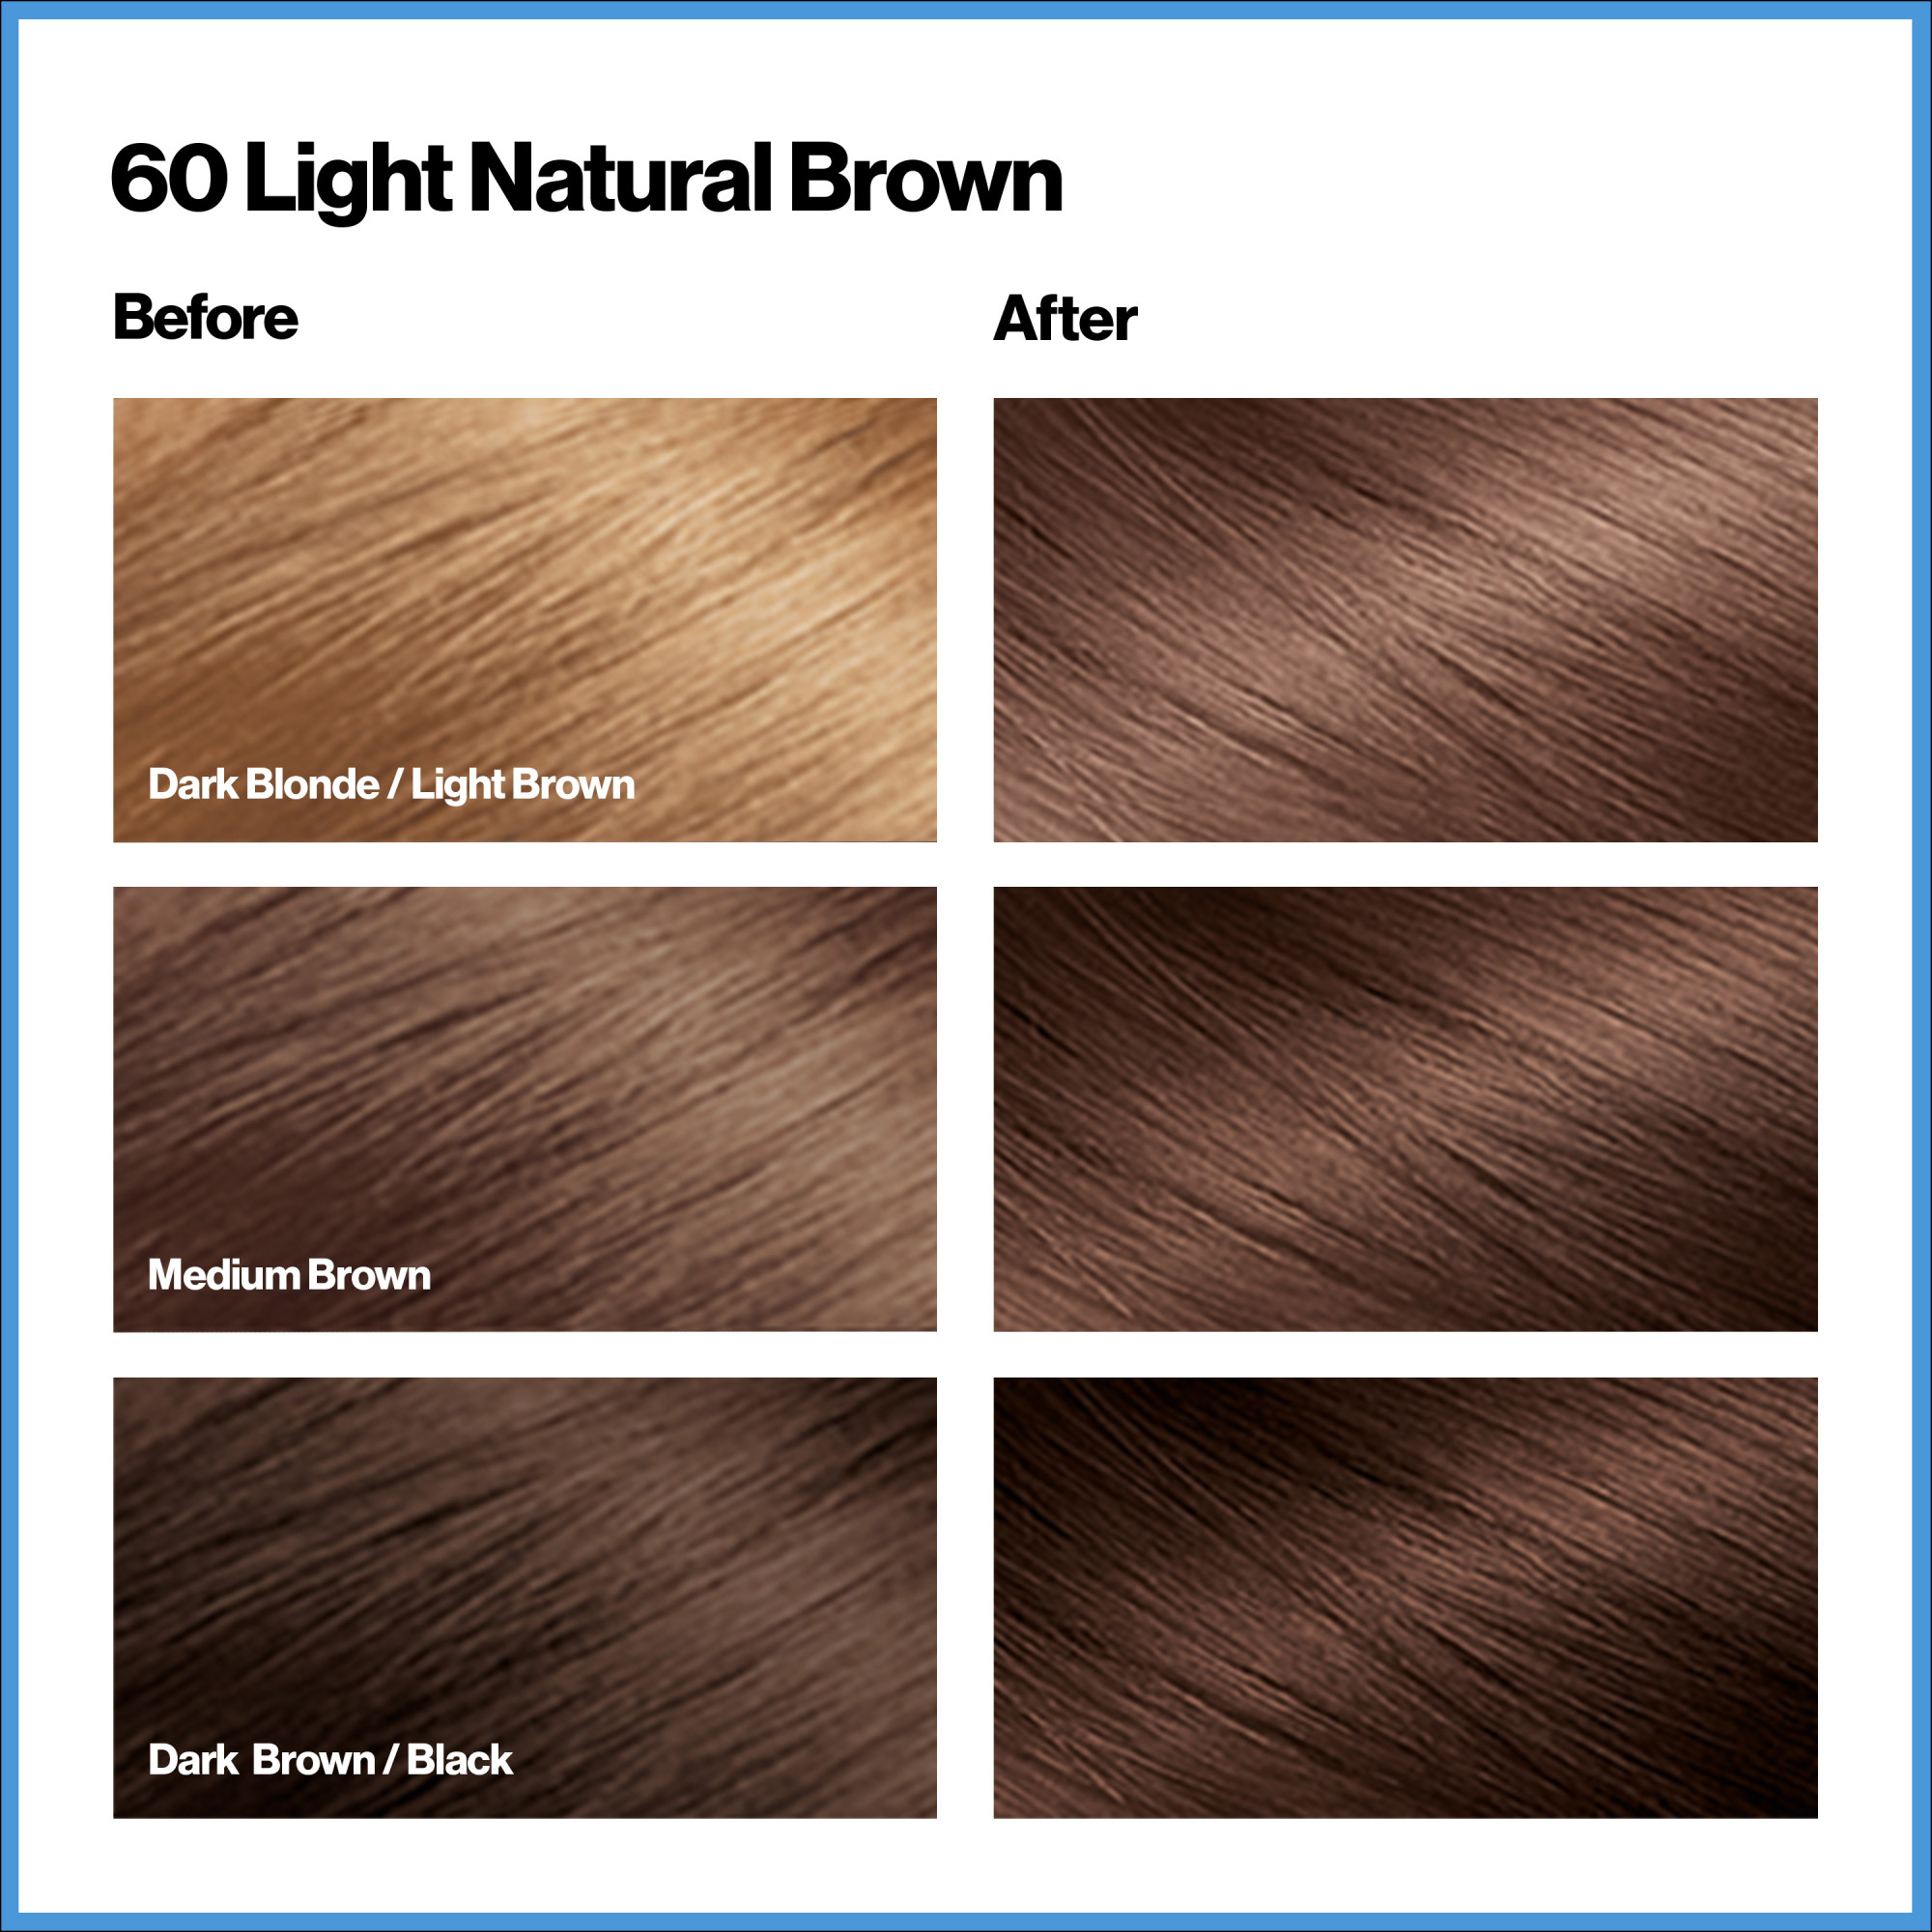 Revlon Permanent Hair Color by Revlon, Permanent Hair Dye, Total Color with 100% Gray Coverage, Clean & Vegan, 60 Light Natural Brown, 3.5 Oz, 60 Light Natural Brown, 5.94 fl oz - image 4 of 16